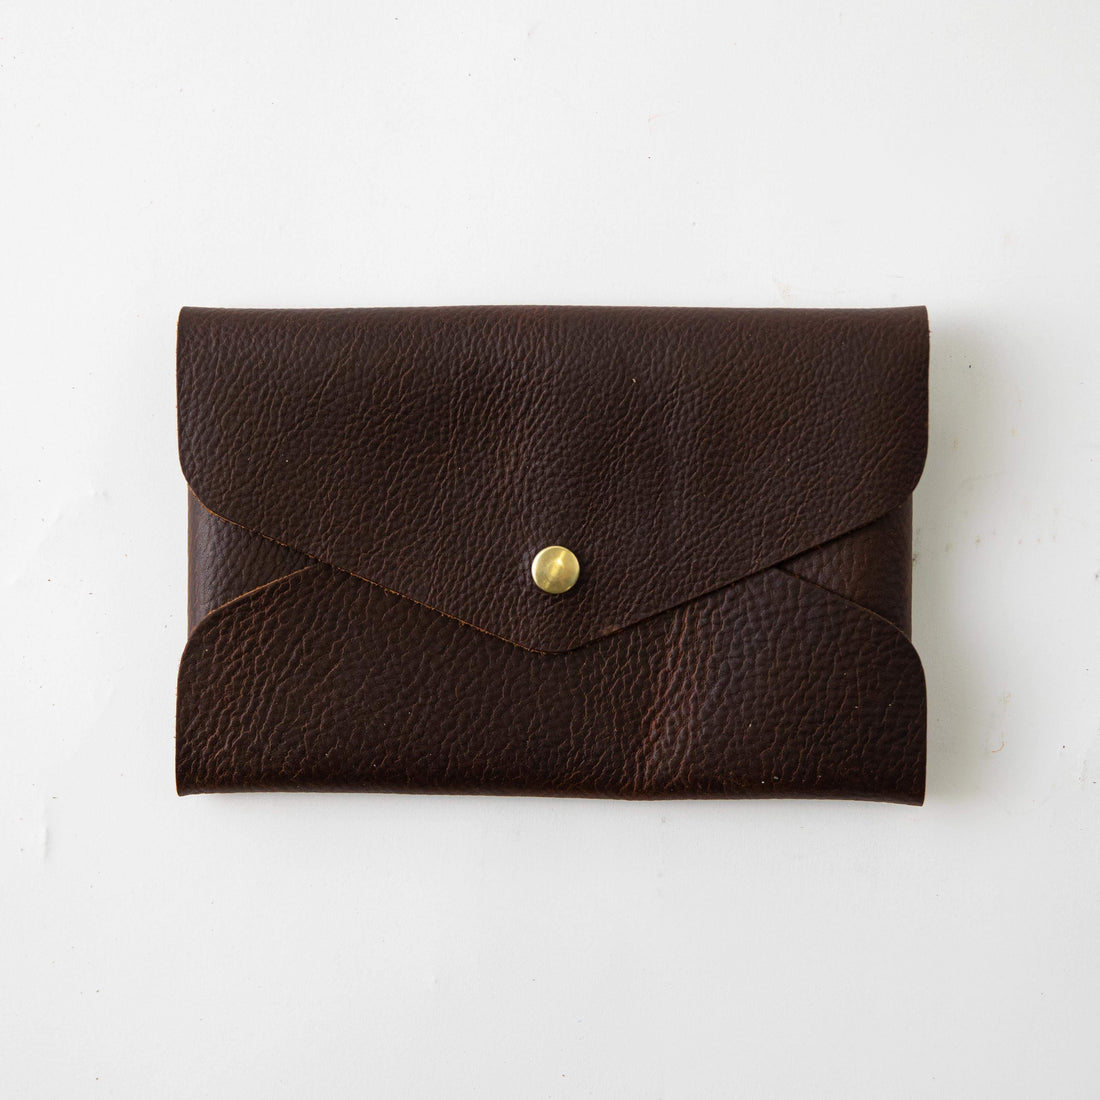 Brown Kodiak Envelope Clutch- leather clutch bag - handmade leather bags - KMM &amp; Co.